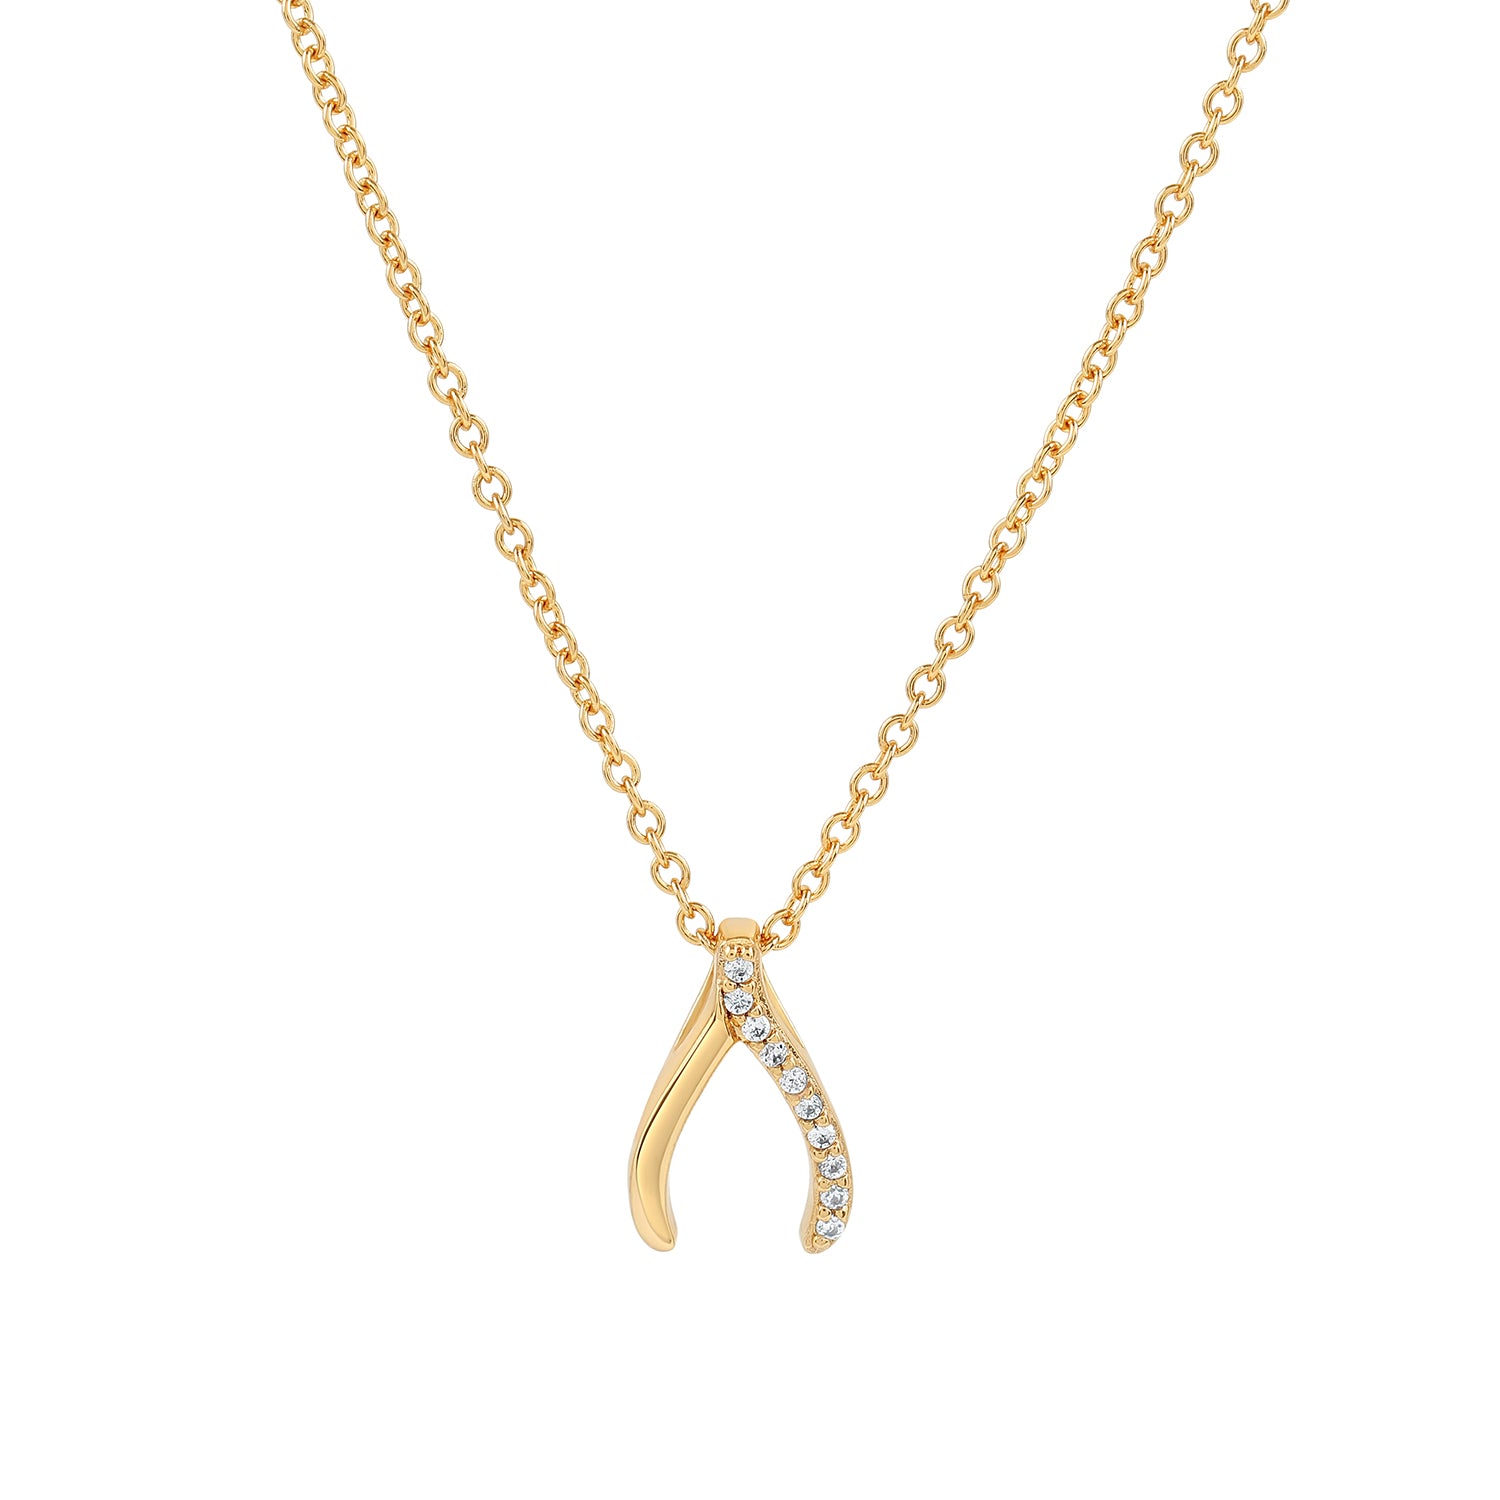 Elegant and minimalist gold wishbone pendant necklace set with cubic zirconia stones.